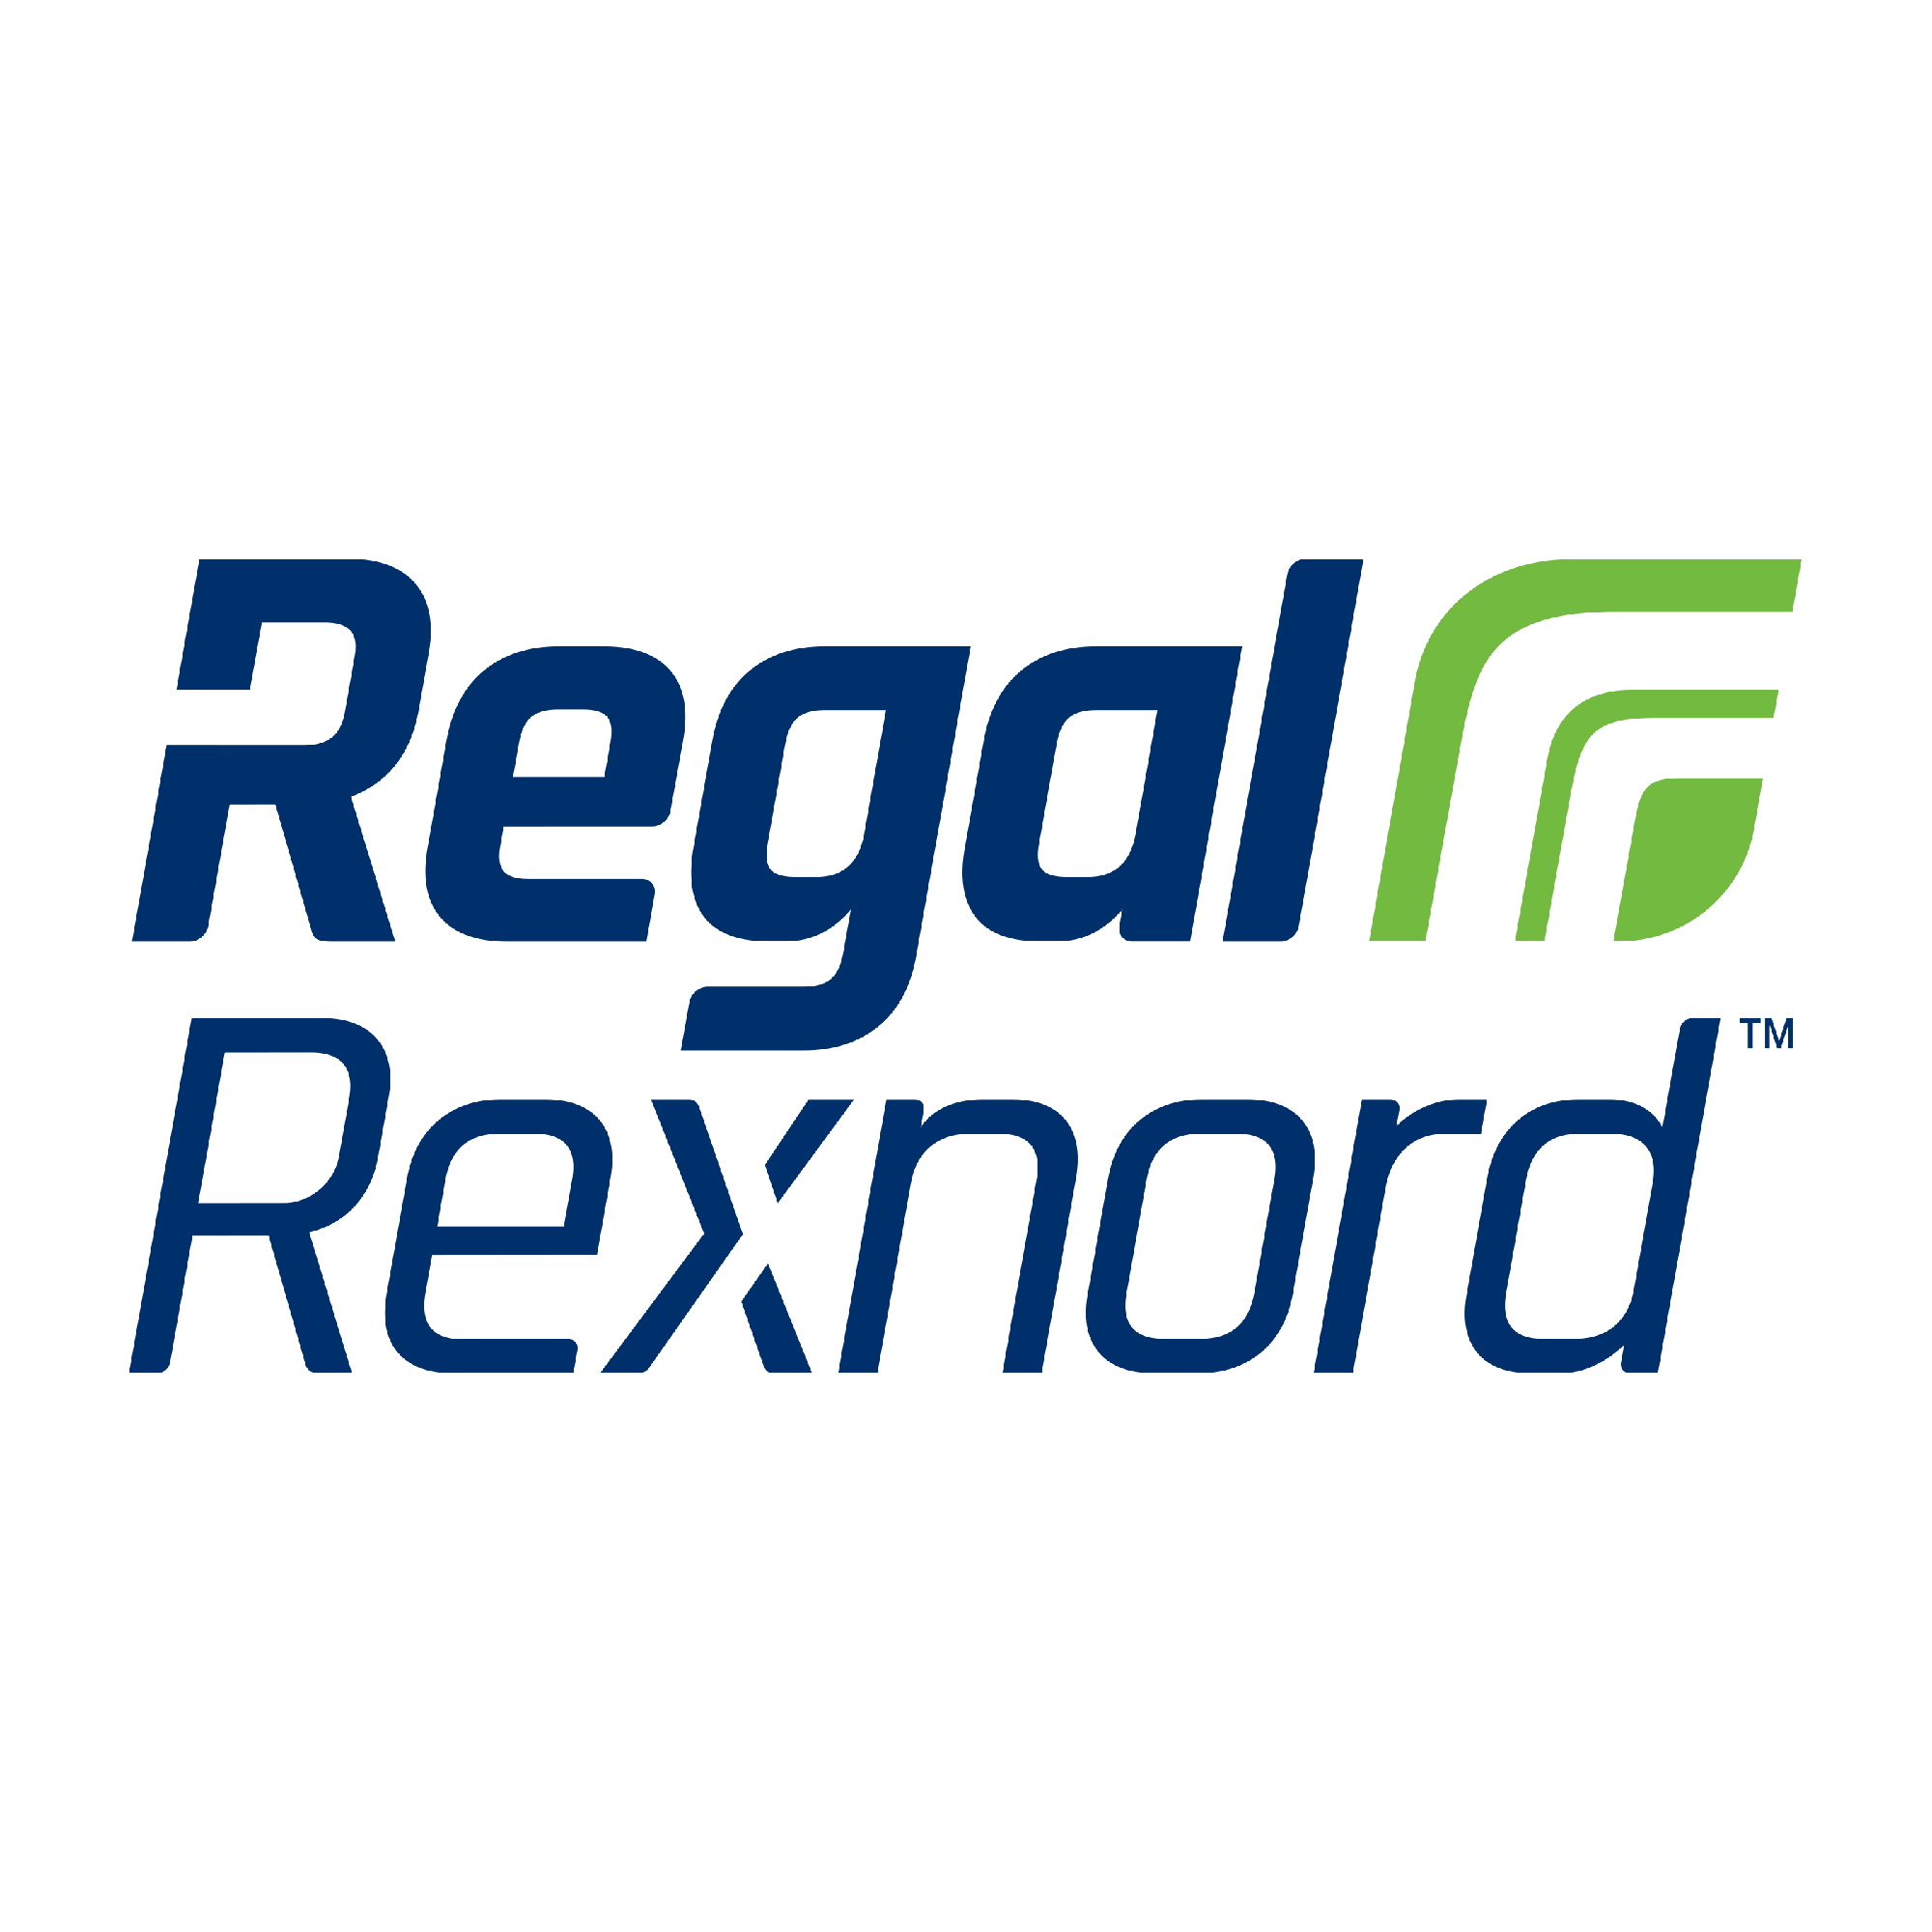 Regal Rexnord Corporation logo